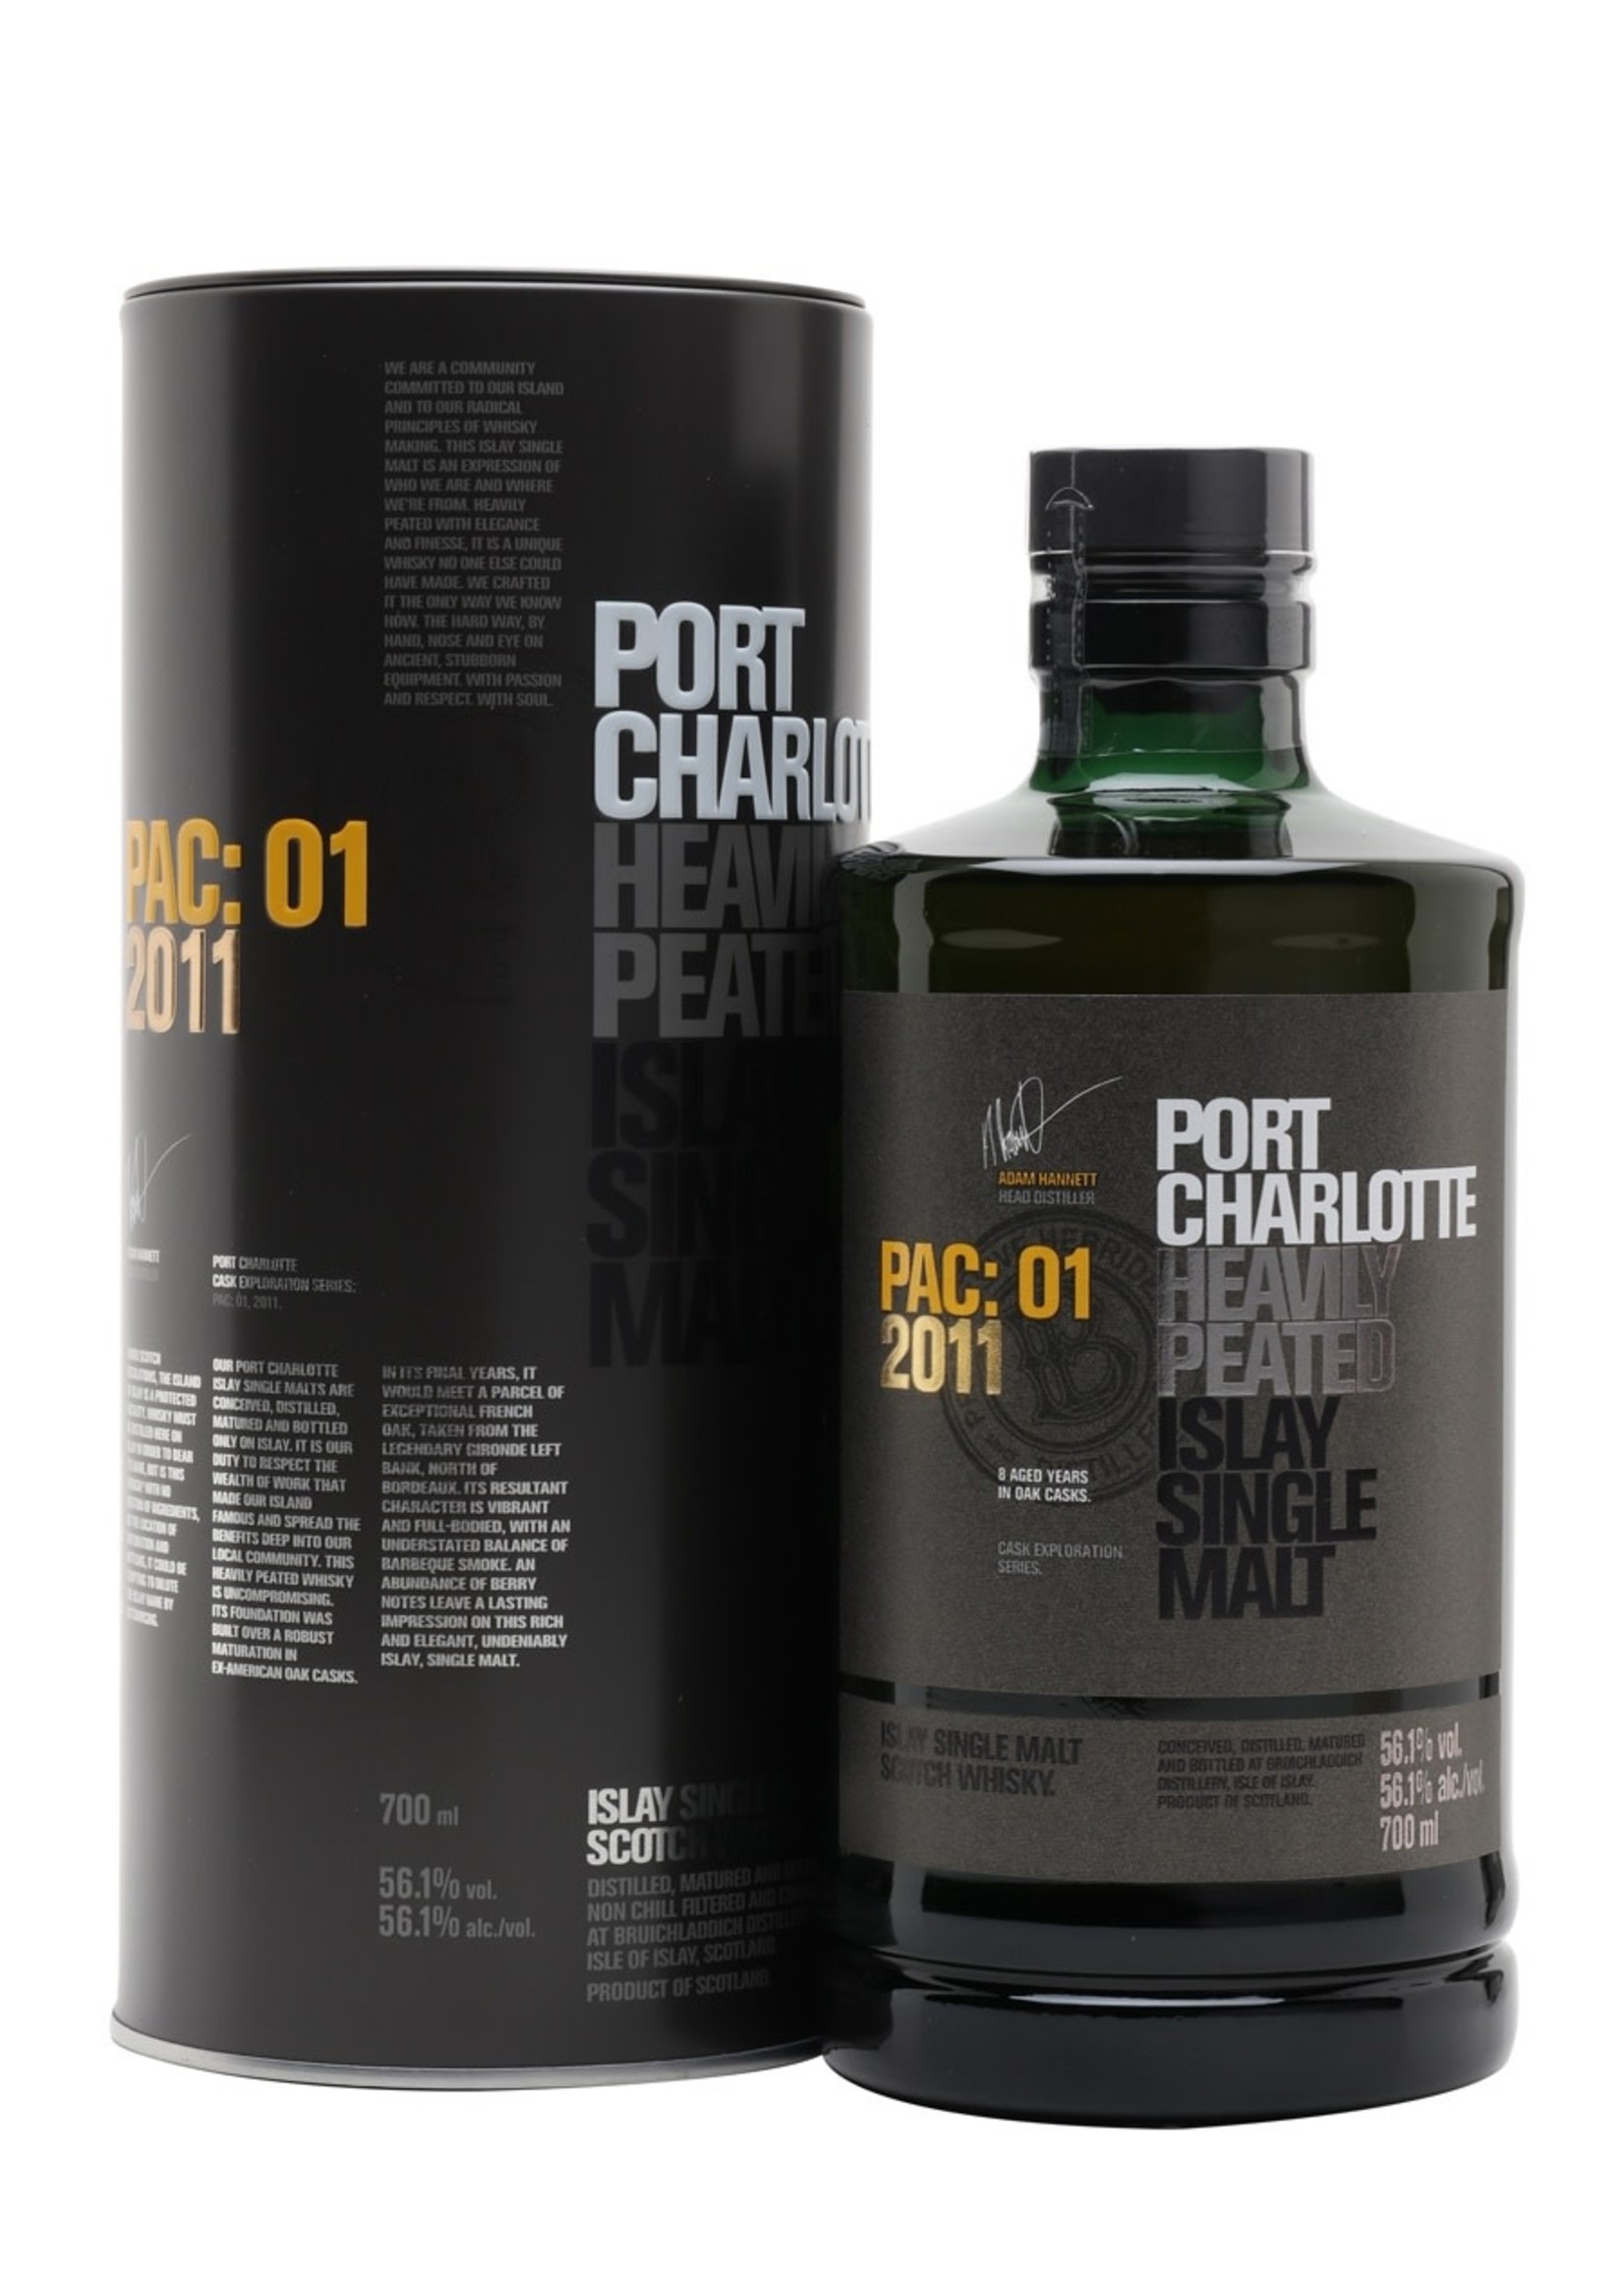 Bruichladdich Port Charlotte / PAC: 01 2011 Heavily Peated Islay Single Malt Scotch Whiskey / 750mL